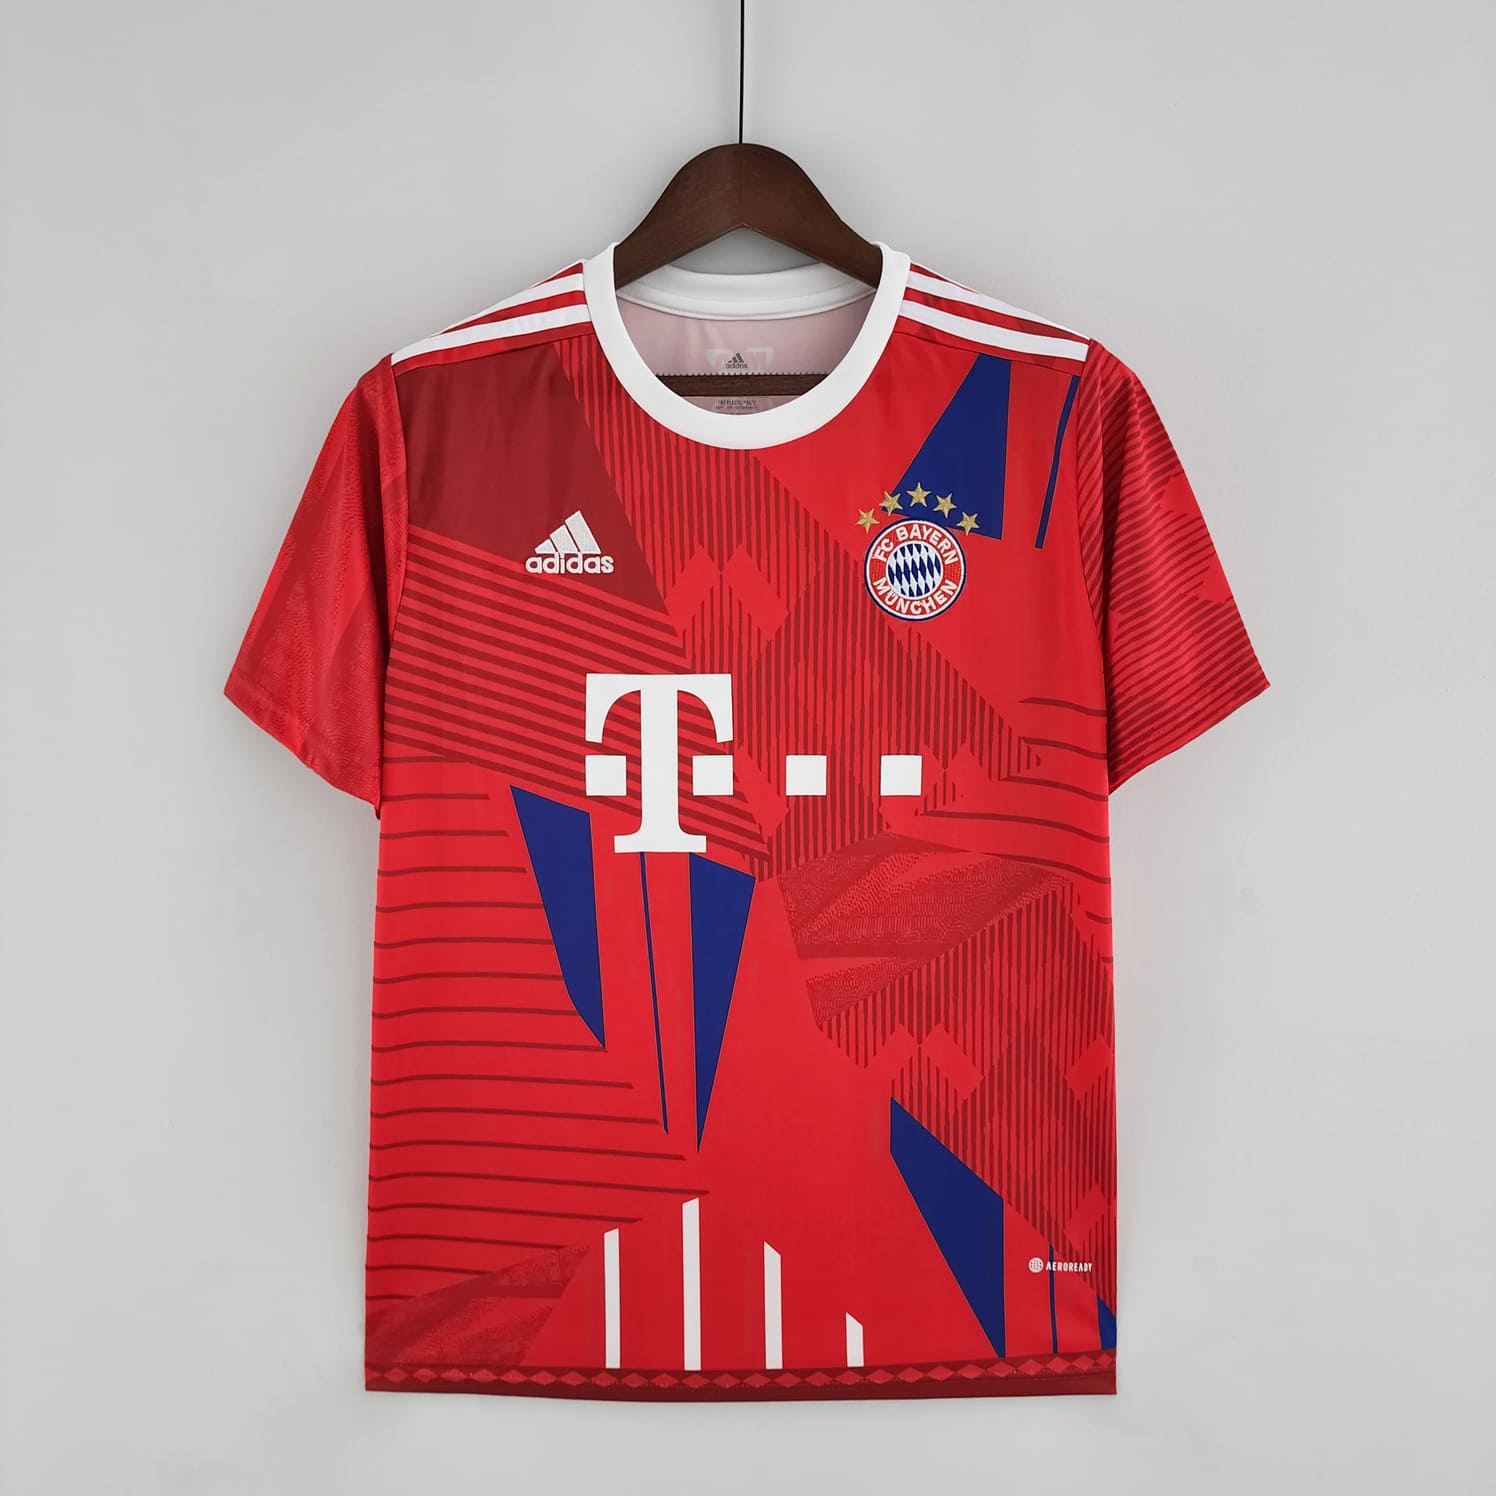 Leer Mathis Infantil Camiseta Bayern Munich 2022 special edition | Adidas - Peru FC